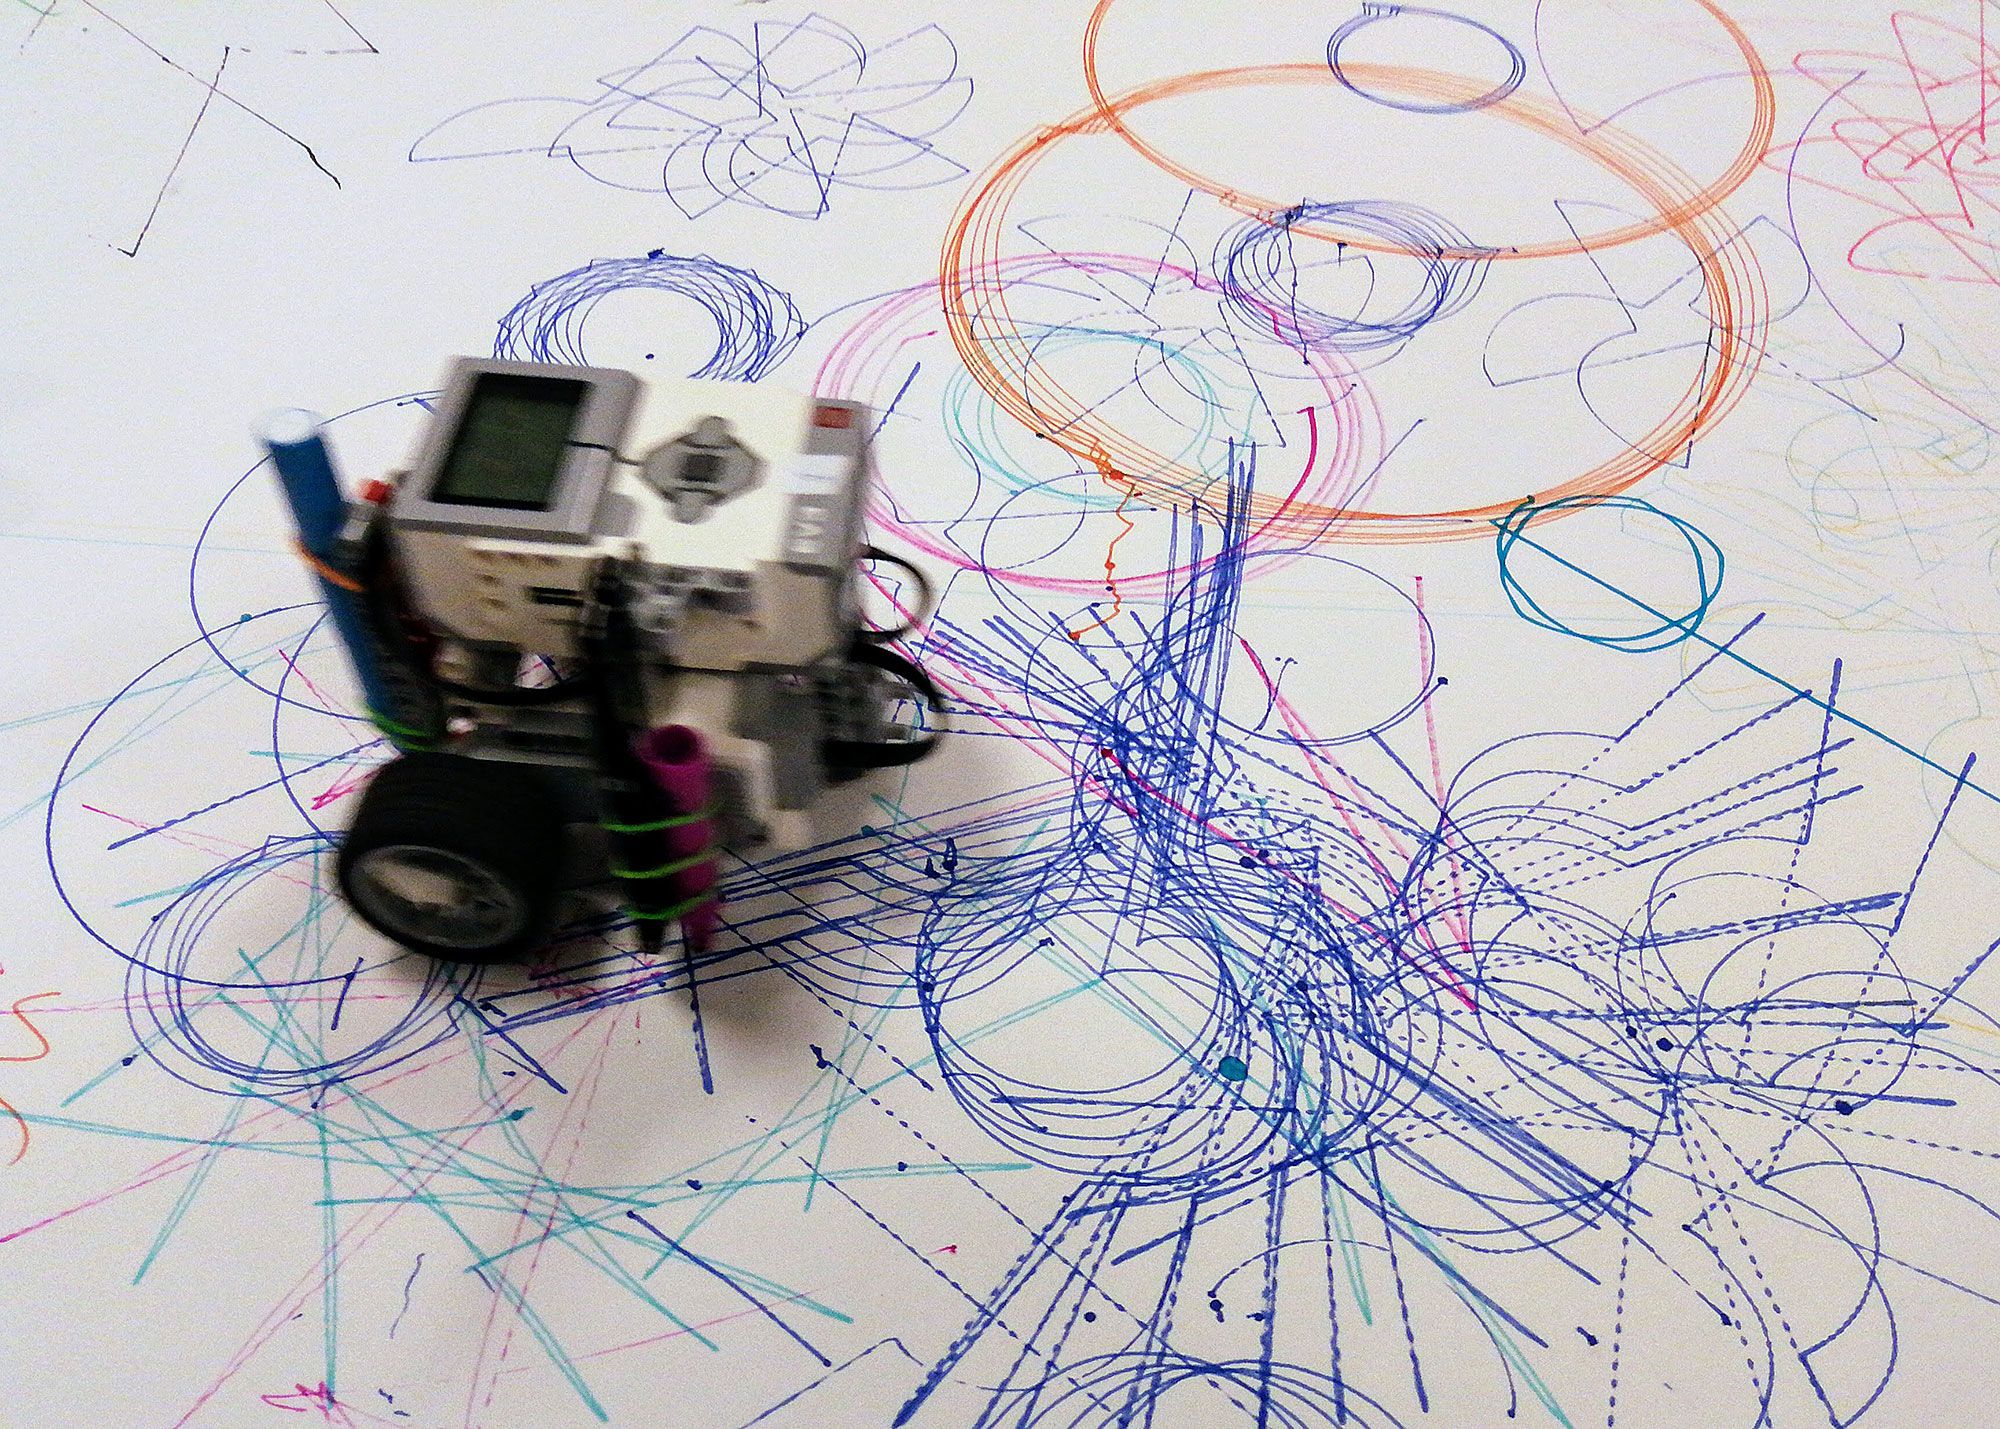 Robot tegner krusedullekunst